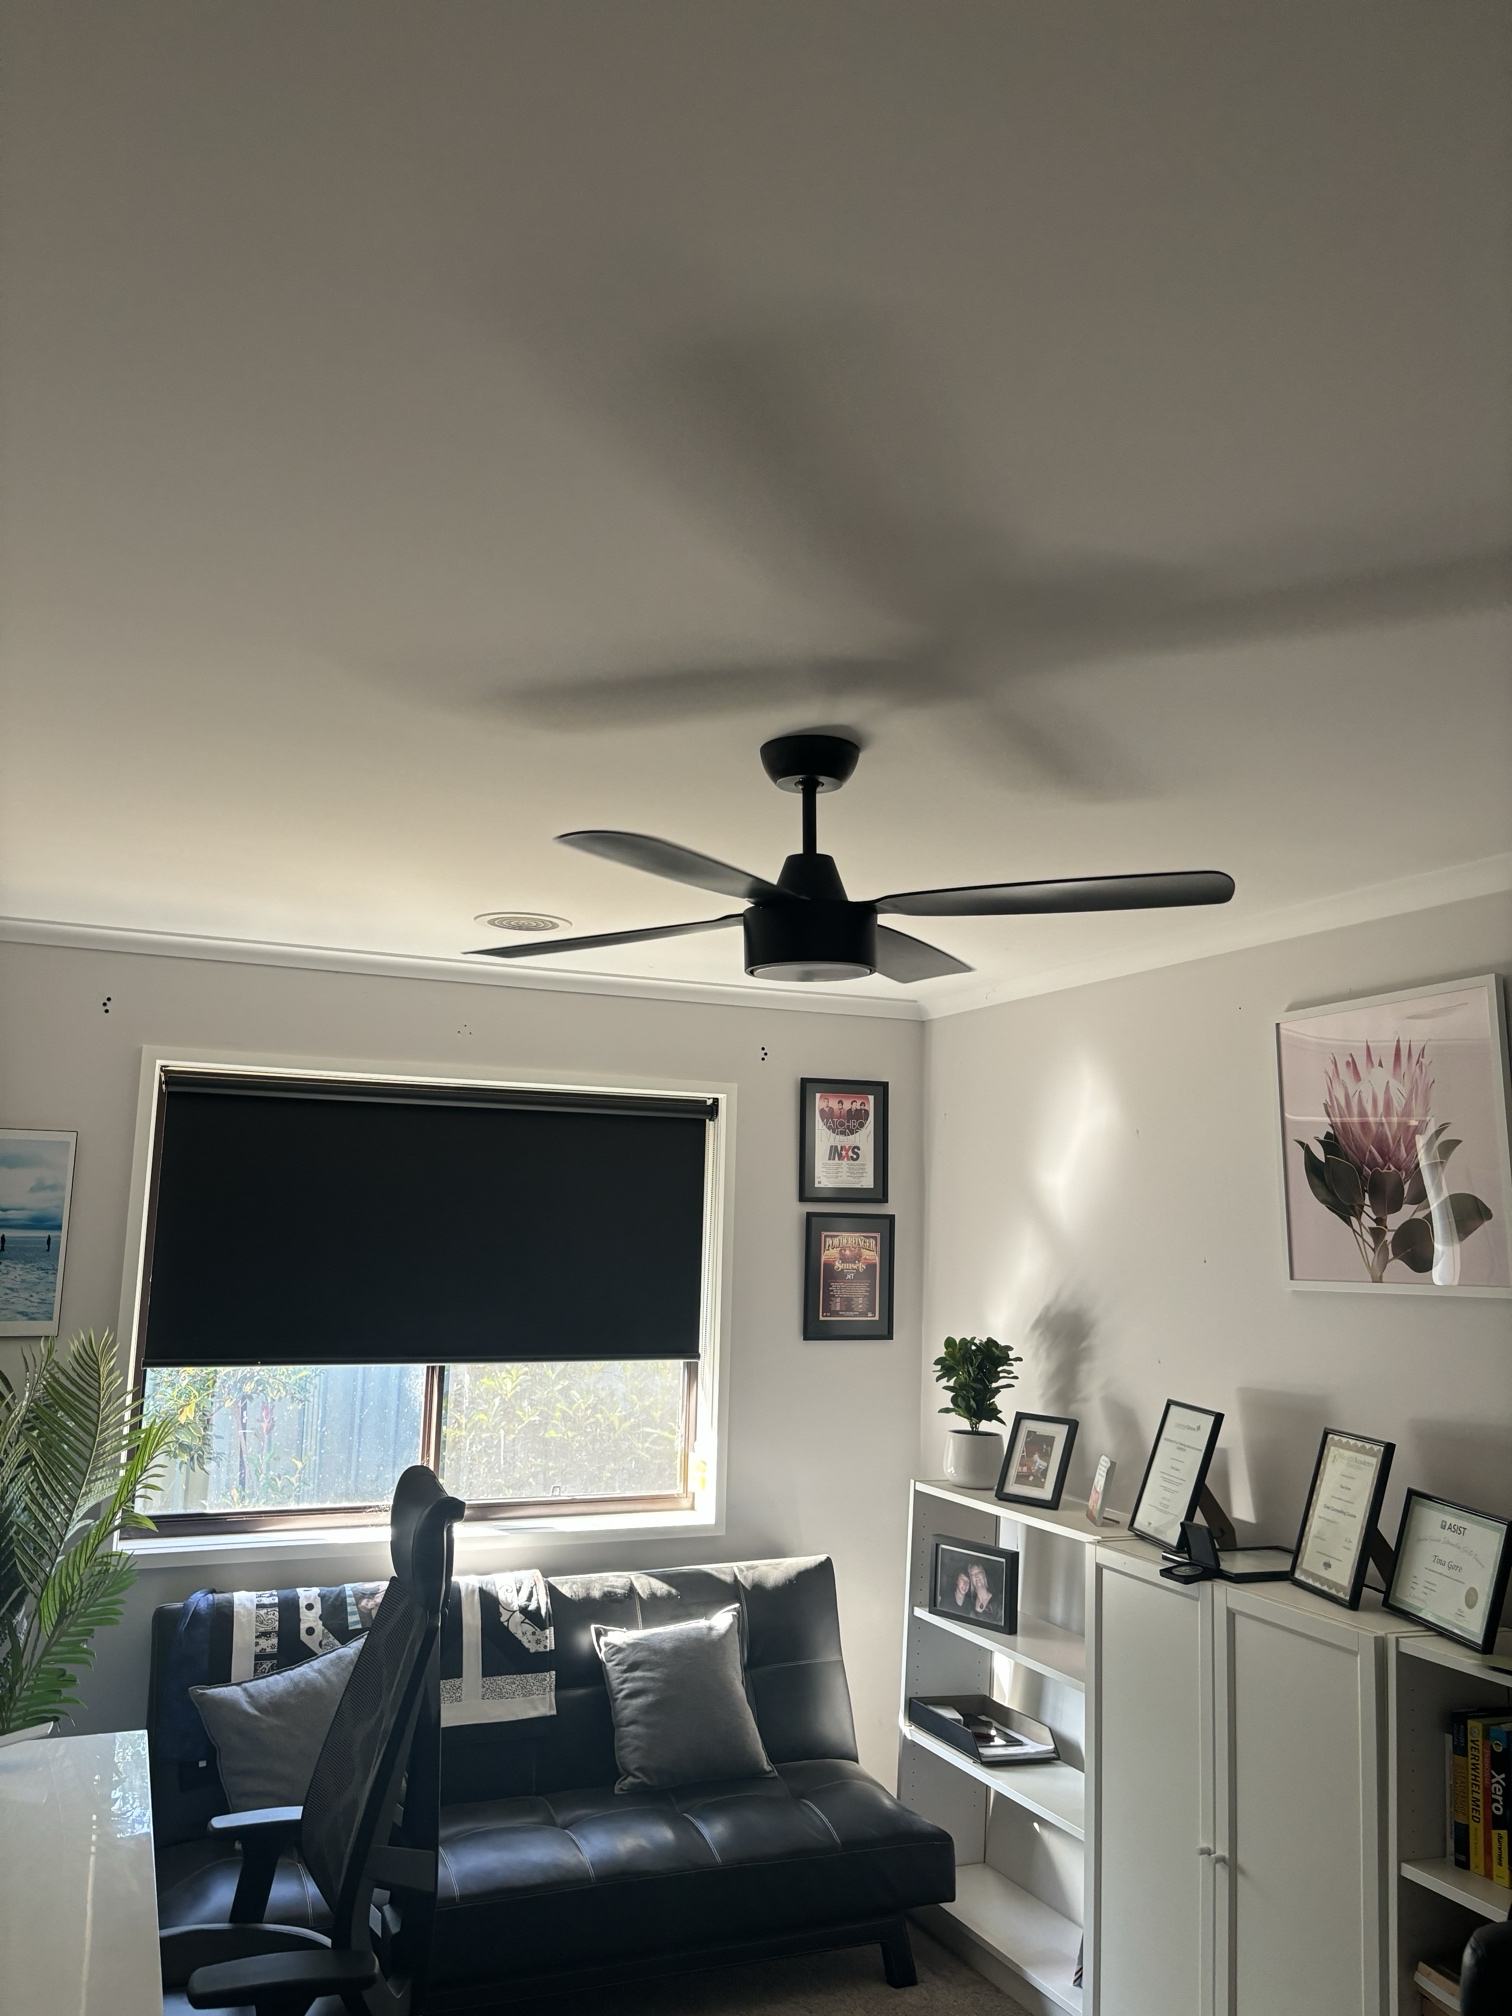 Ceiling fan installation in a residence in Canberra